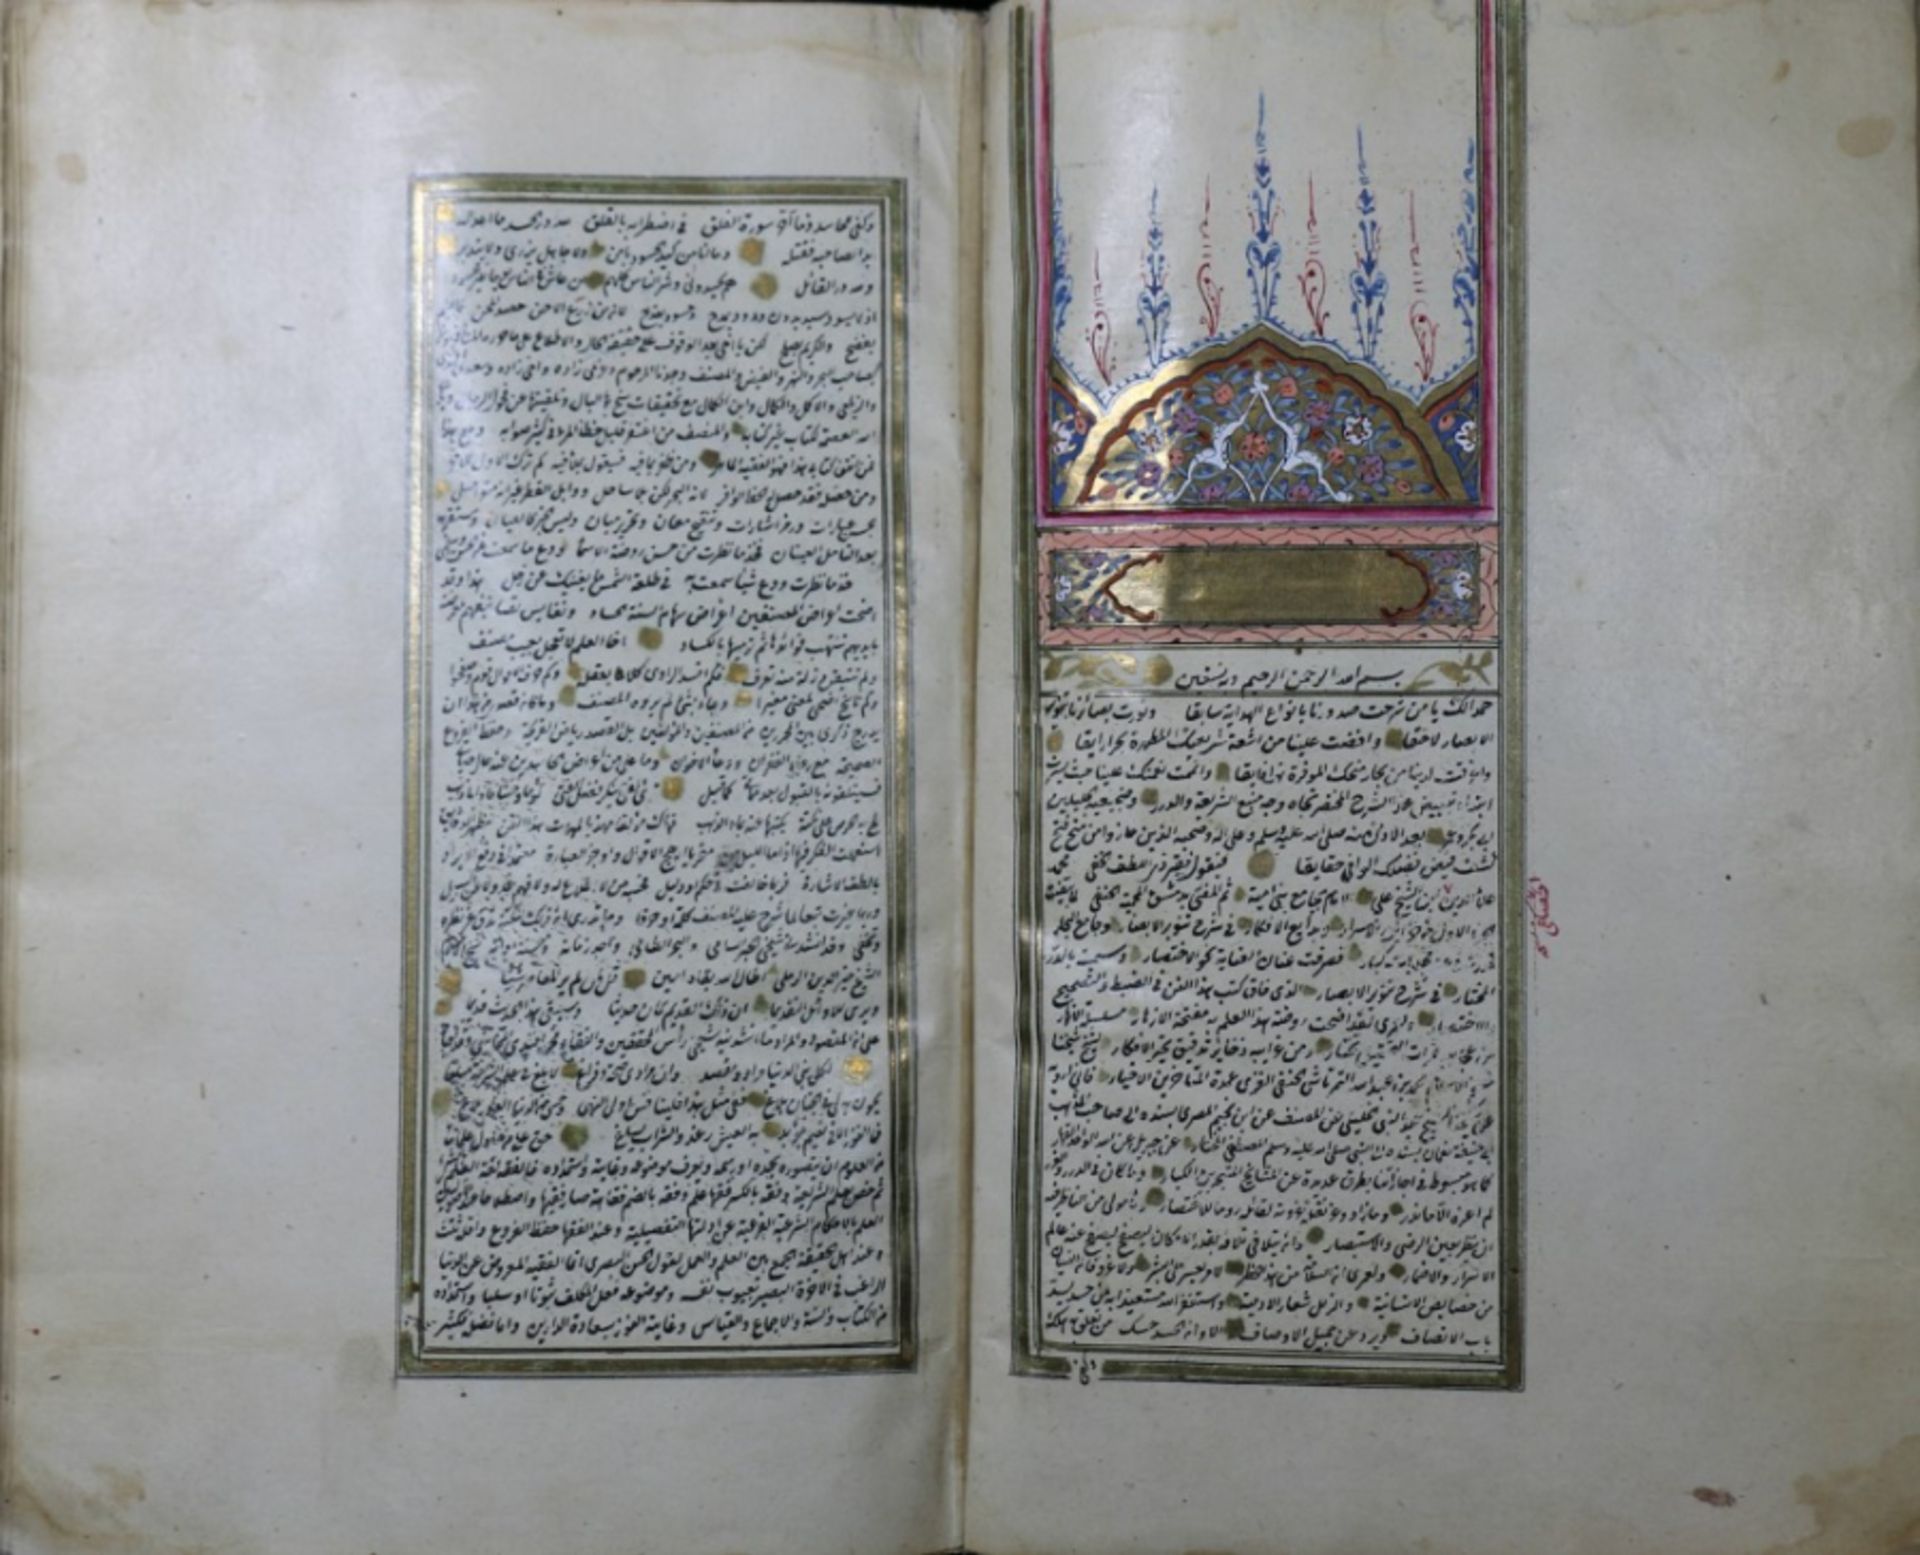 Dur Al-Mukhtar Sharah Tanweer Al-Absar by sheikh Muhammad Ala al-Din al-Haskafi - Image 5 of 13